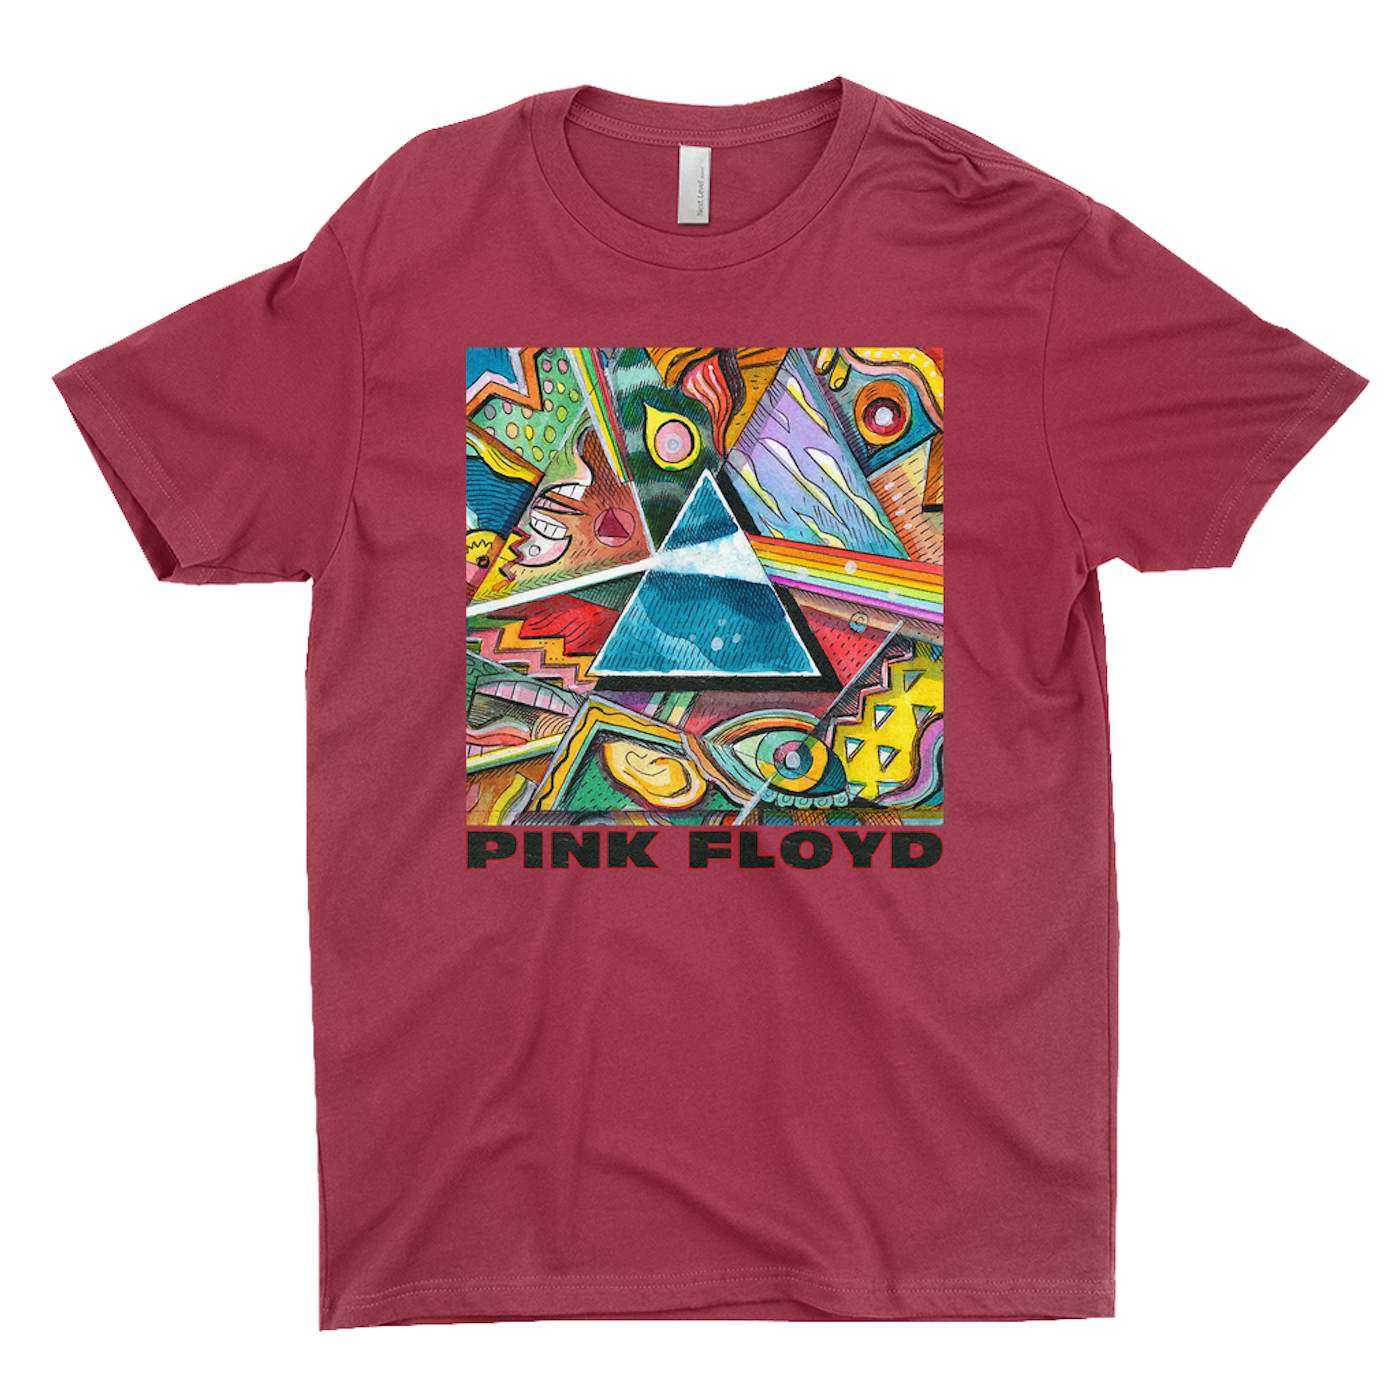 Pink Floyd T-Shirt | Picasso Prism Artwork Pink Floyd Shirt (Merchbar Exclusive)